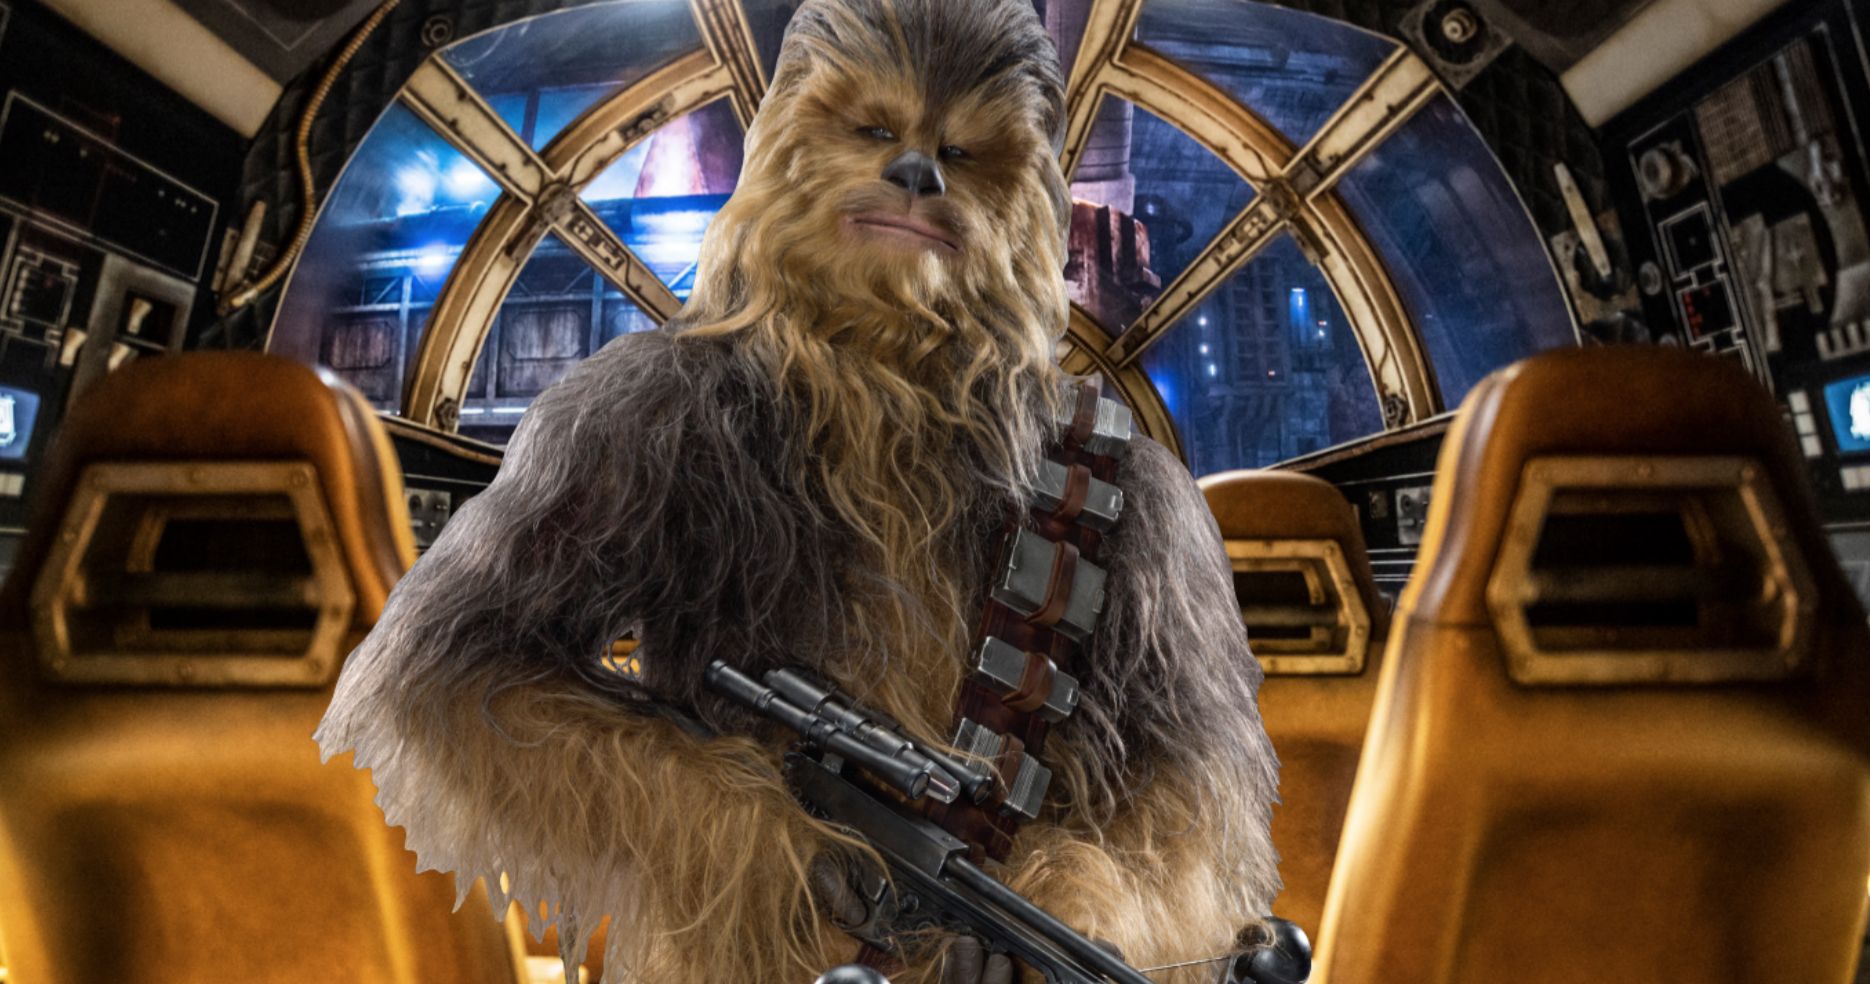 Wookie Hack Unlocks Secret Chewbacca Mode in Galaxy's Edge Millennium Falcon Ride